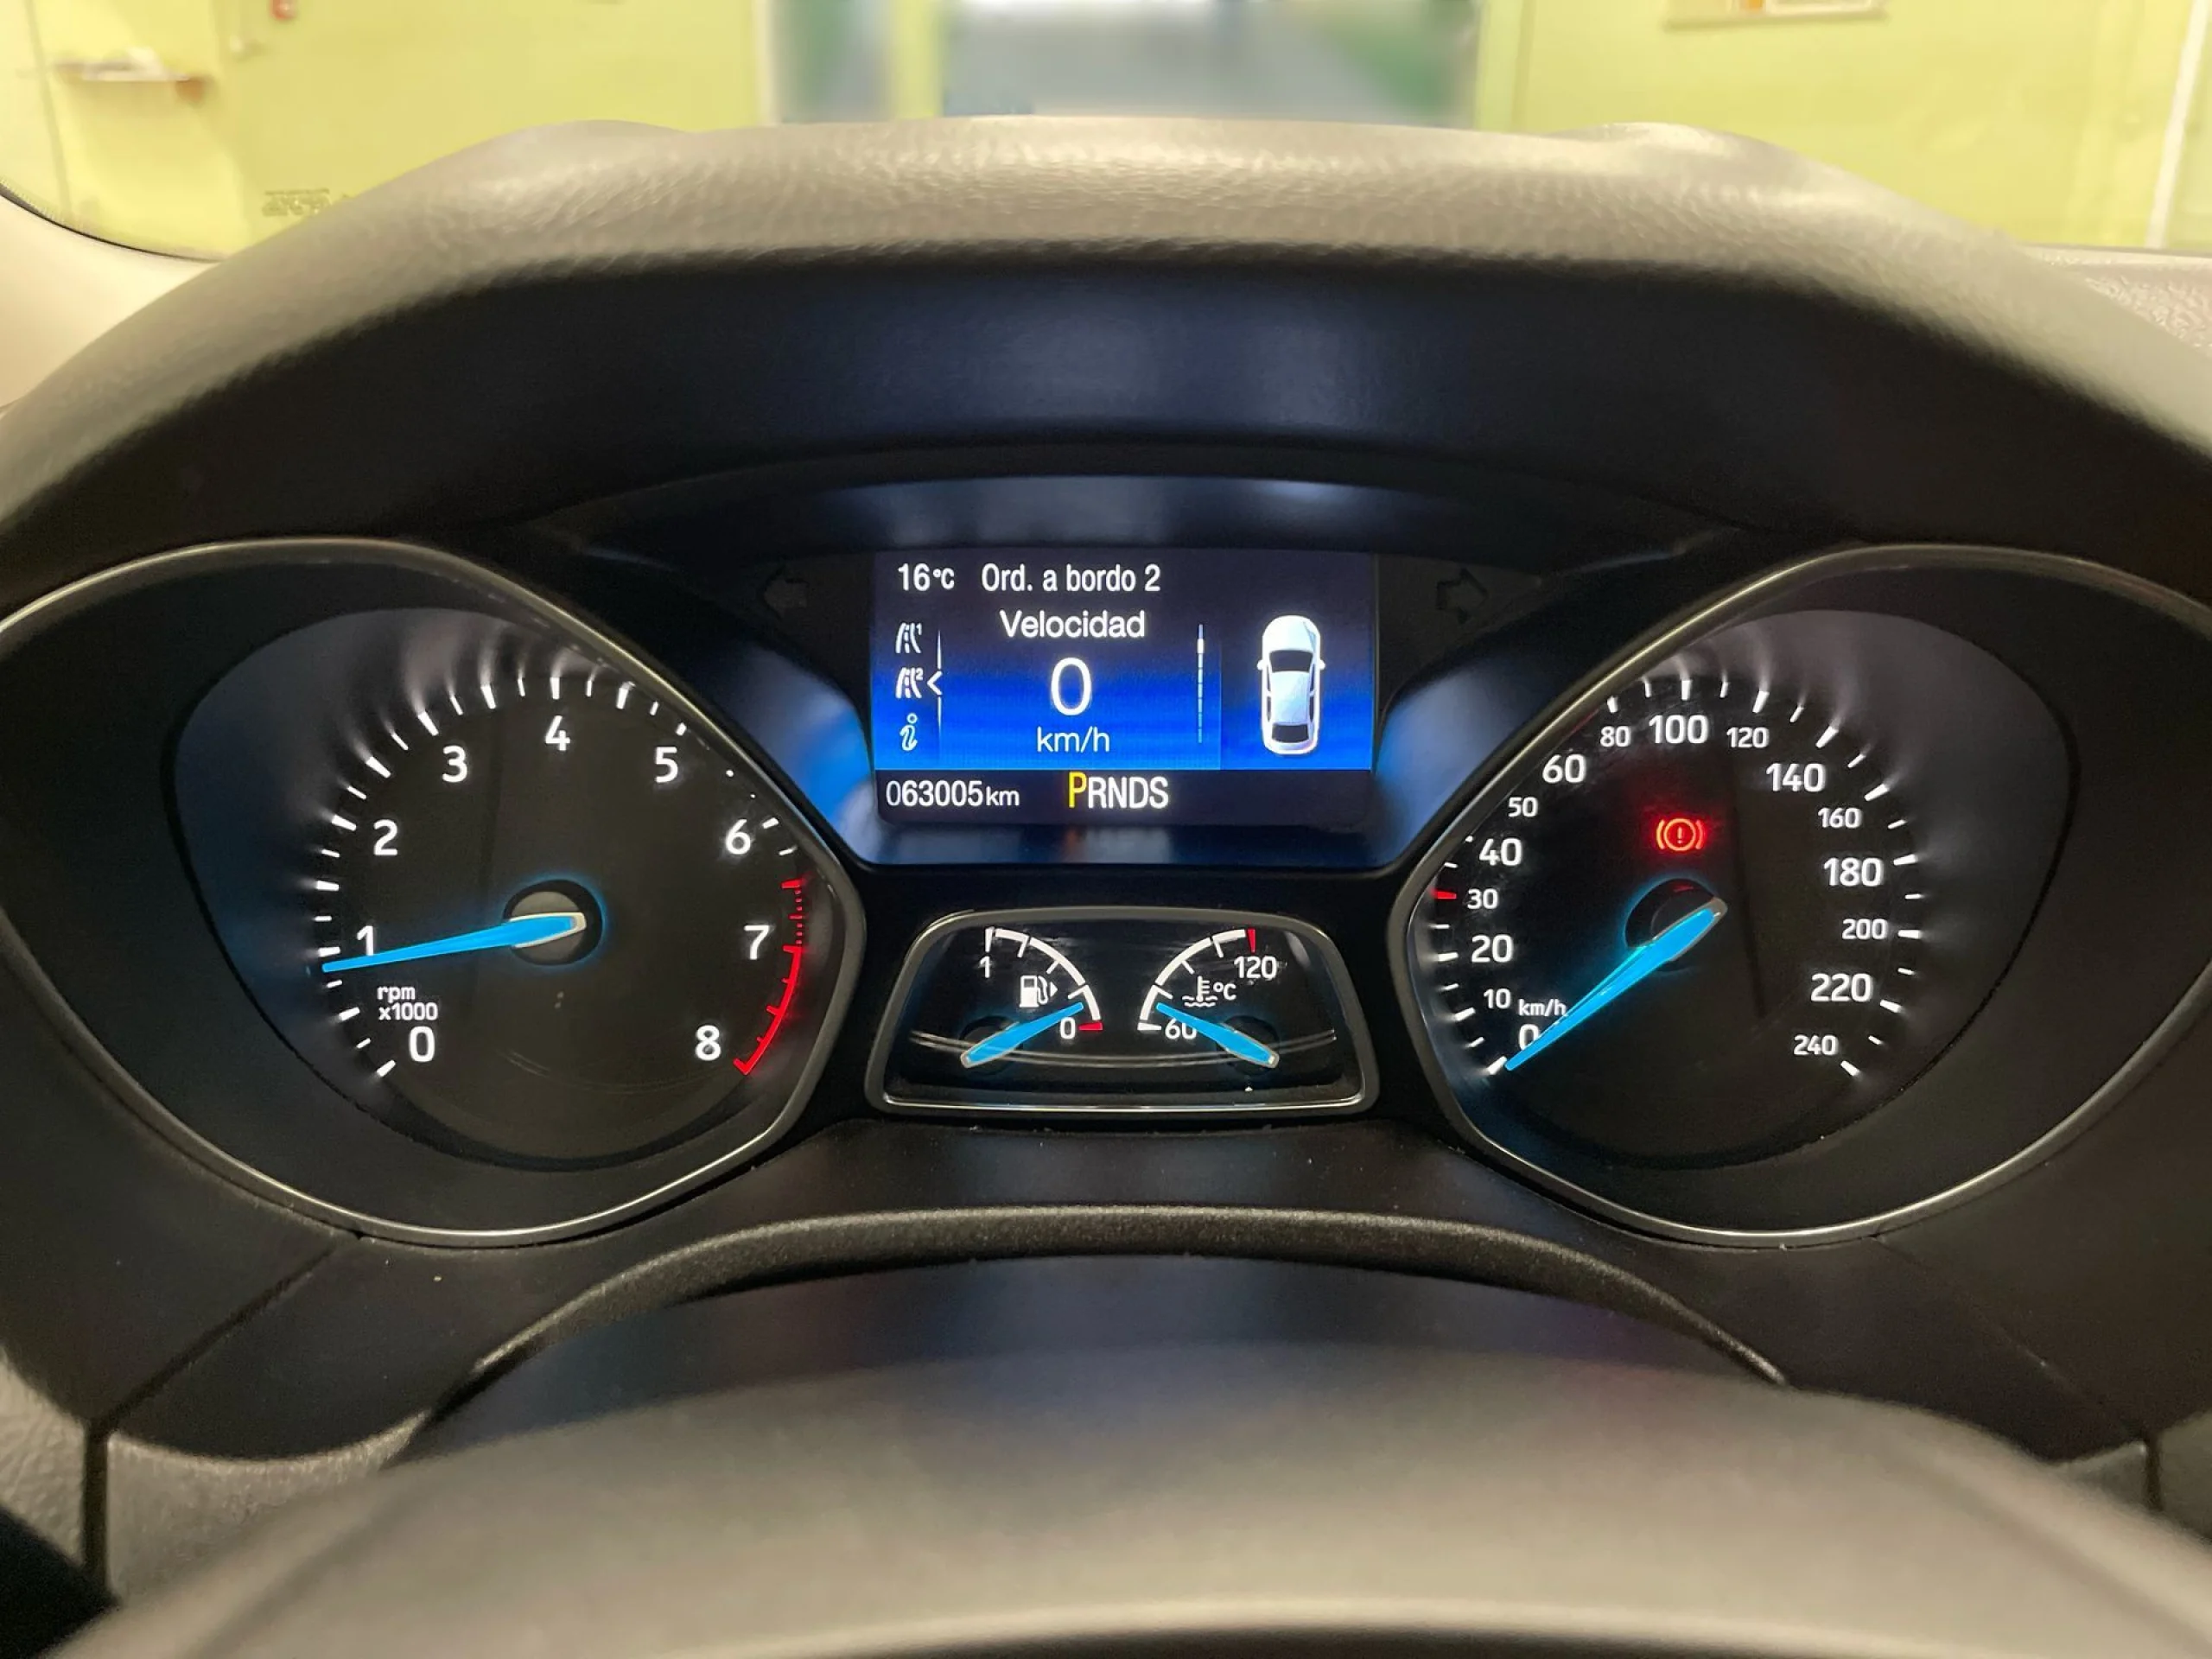 Ford Focus 1.6 TI-VCT Trend+ PowerShift 92 kW (125 CV) - Foto 11